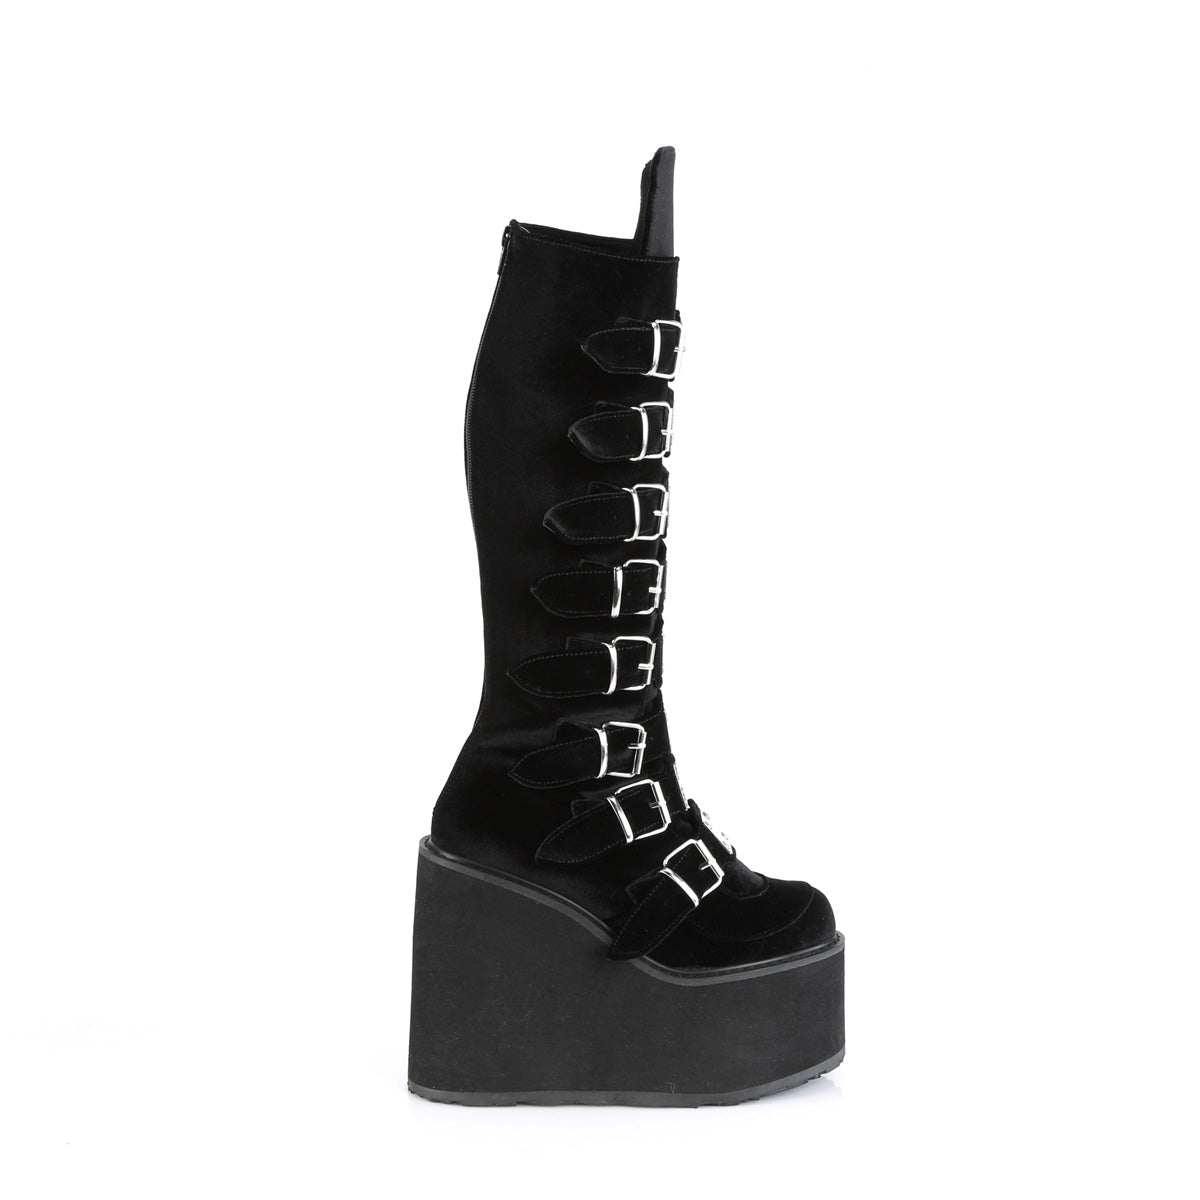 SWING-815 Demonia Black Velvet Women's Mid-Calf & Knee High Boots [Demonia Cult Alternative Footwear]